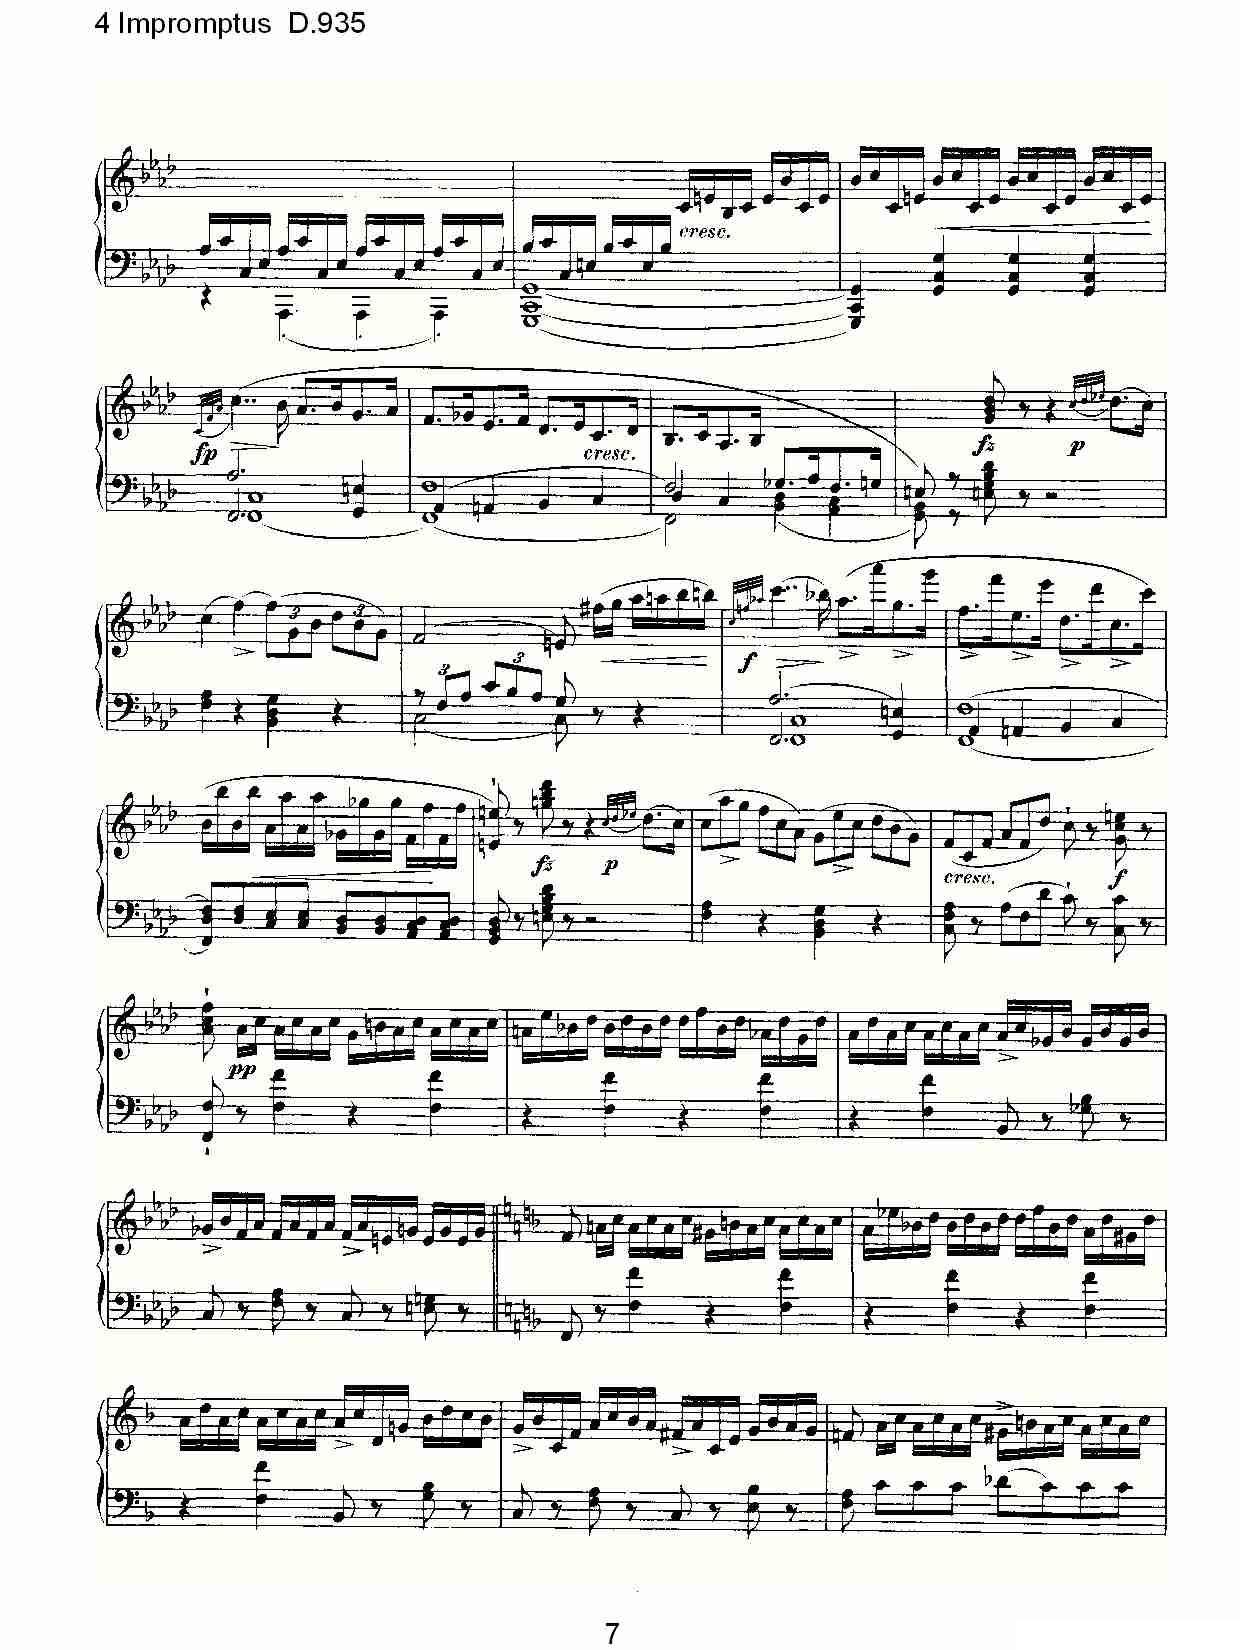 4 Impromptus D.935（4人即兴演奏D.935）钢琴曲谱（图7）